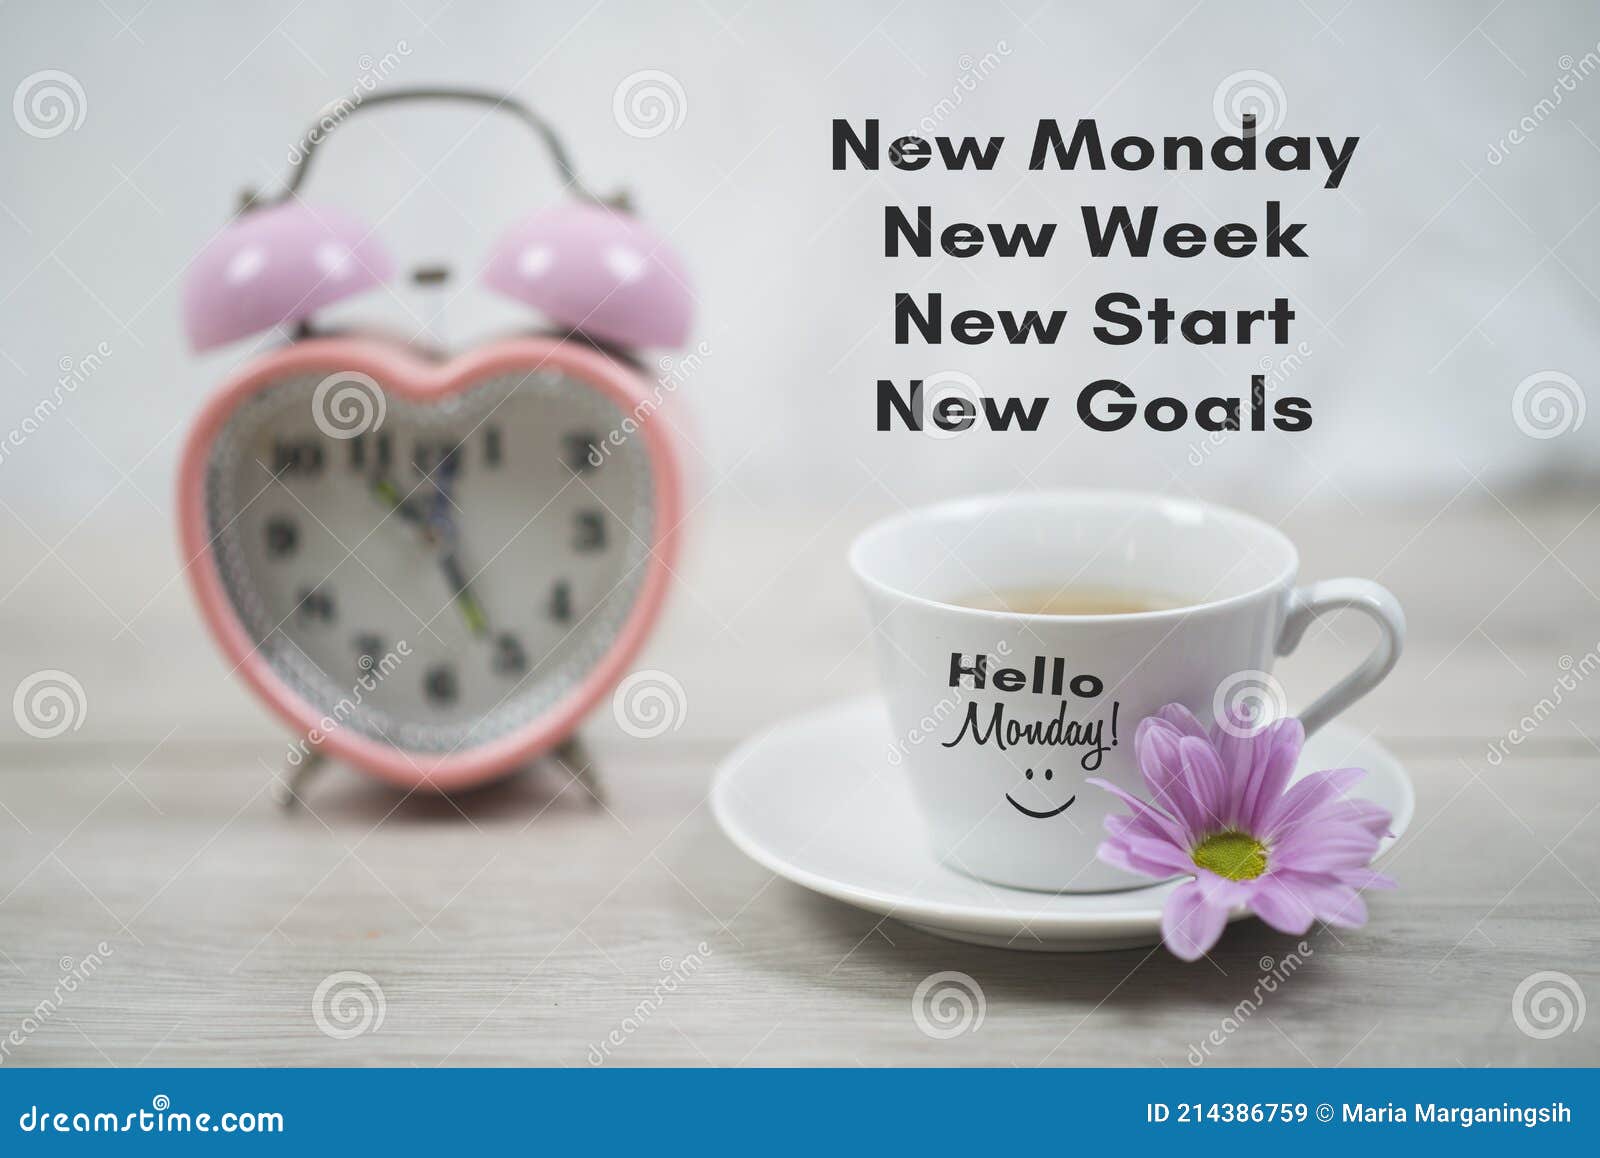 New Monday. New Week. New Start. New Goals. Monday Inspirational ...